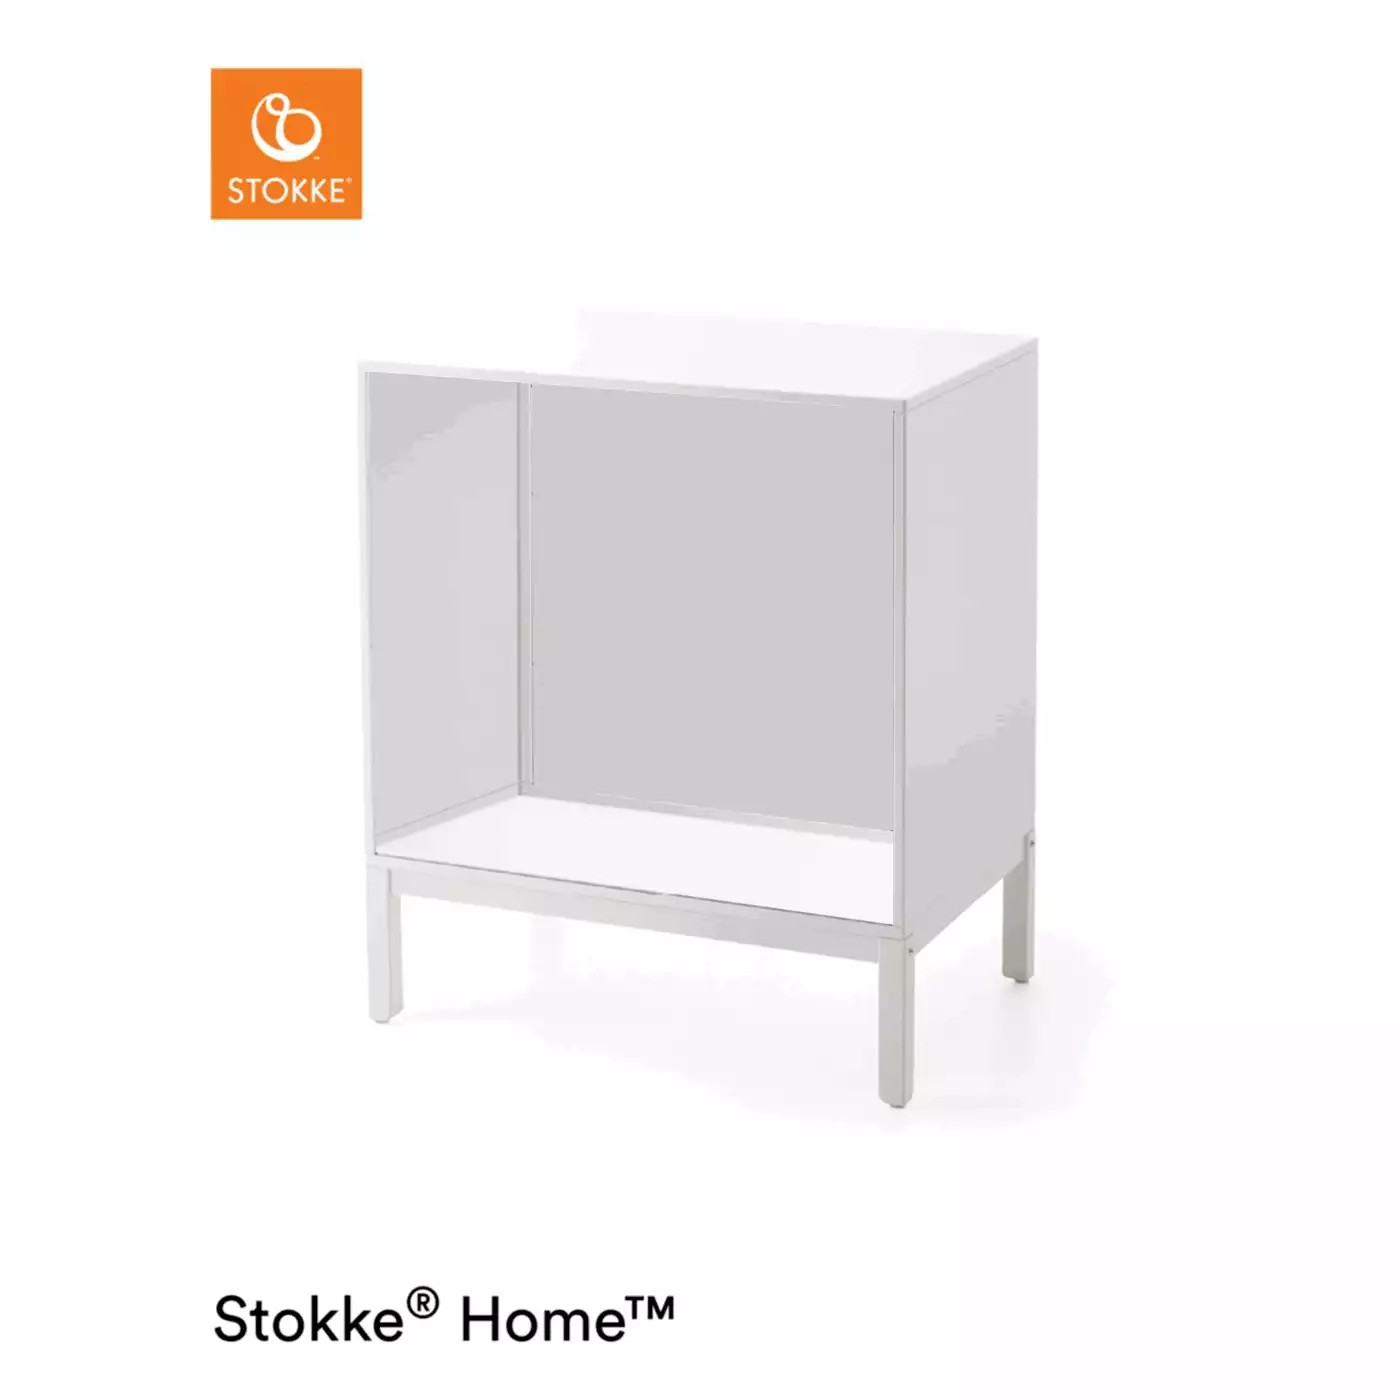 Home™ Dresser White Box 1 STOKKE 2000565853309 3